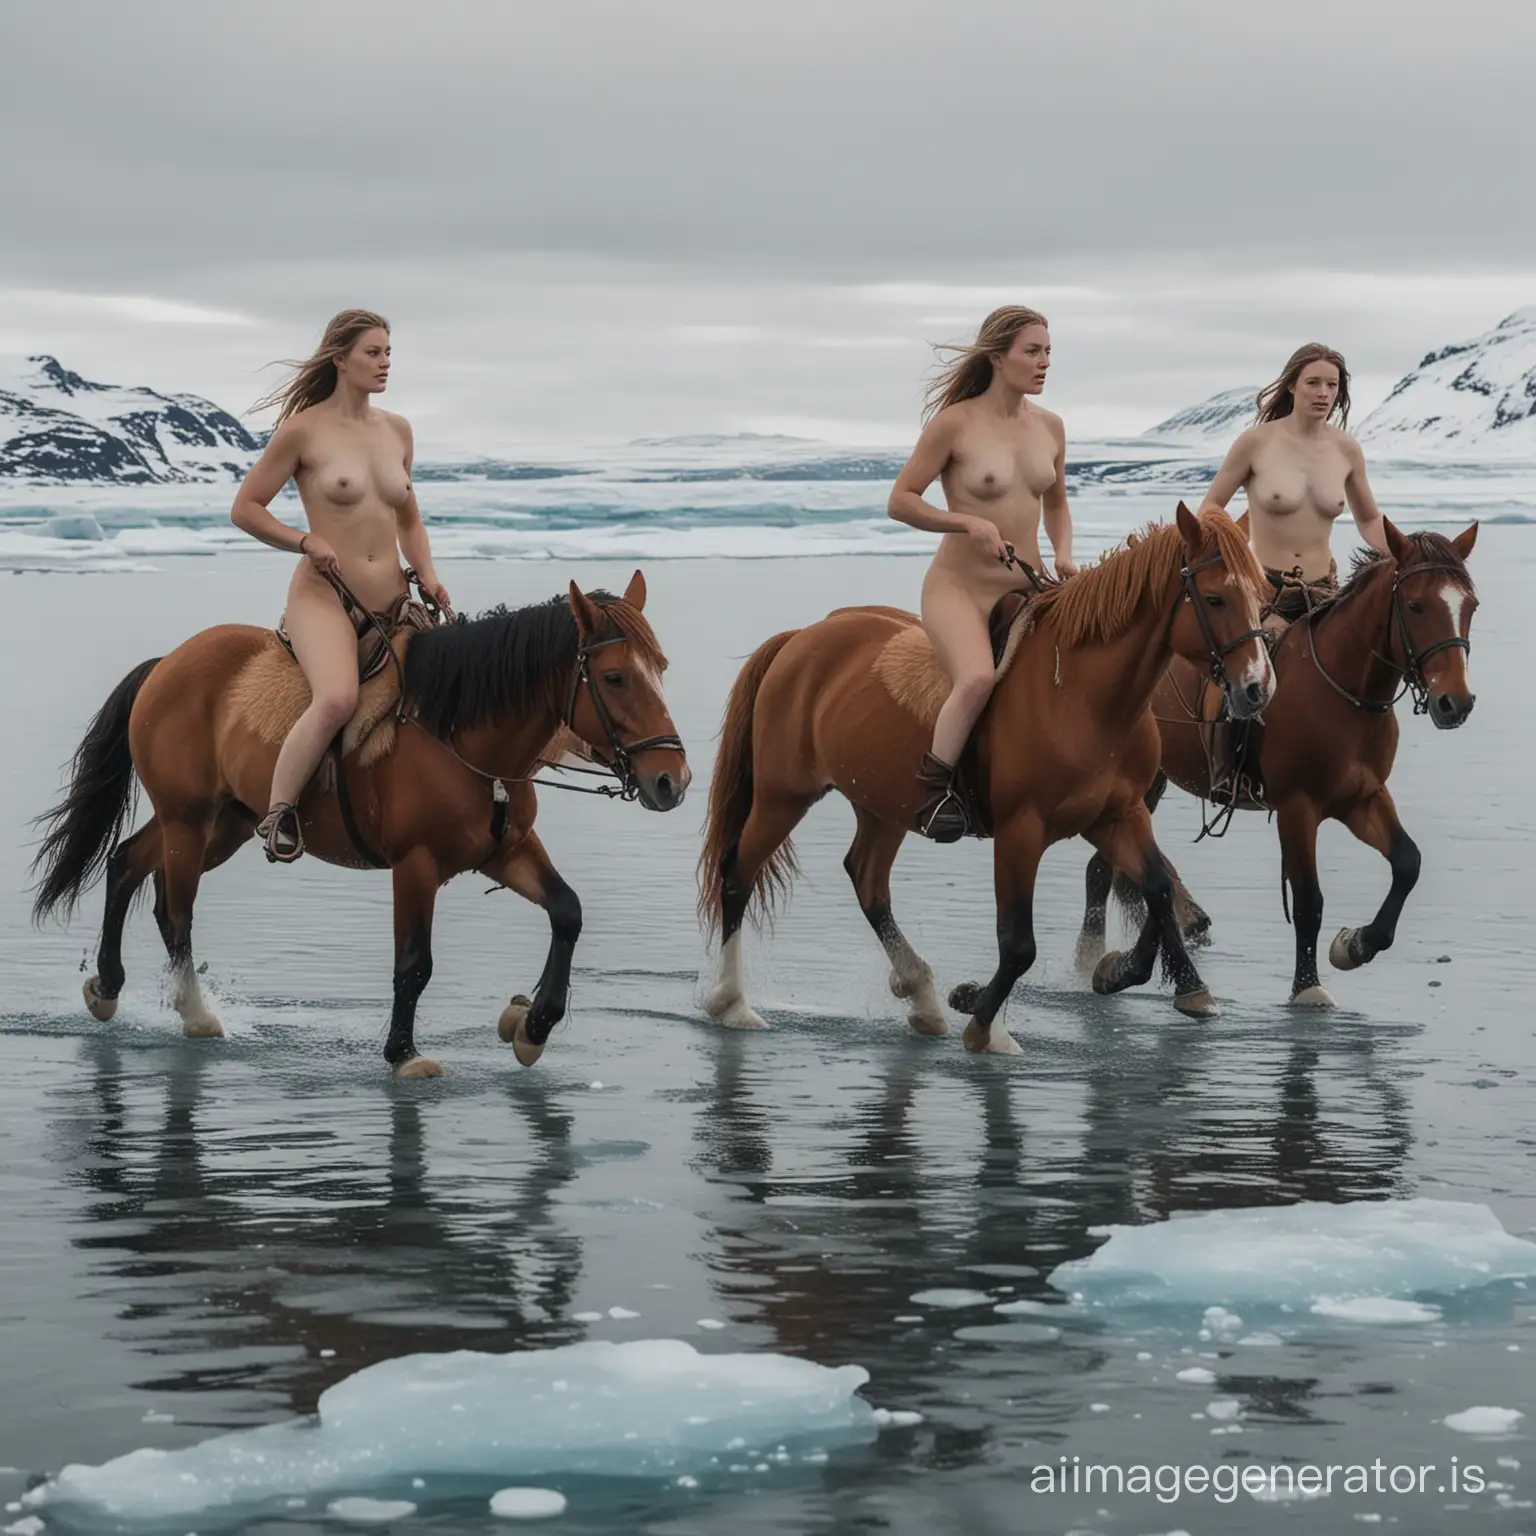 3 Icelandic warrior women naked on horses running on the ice floe